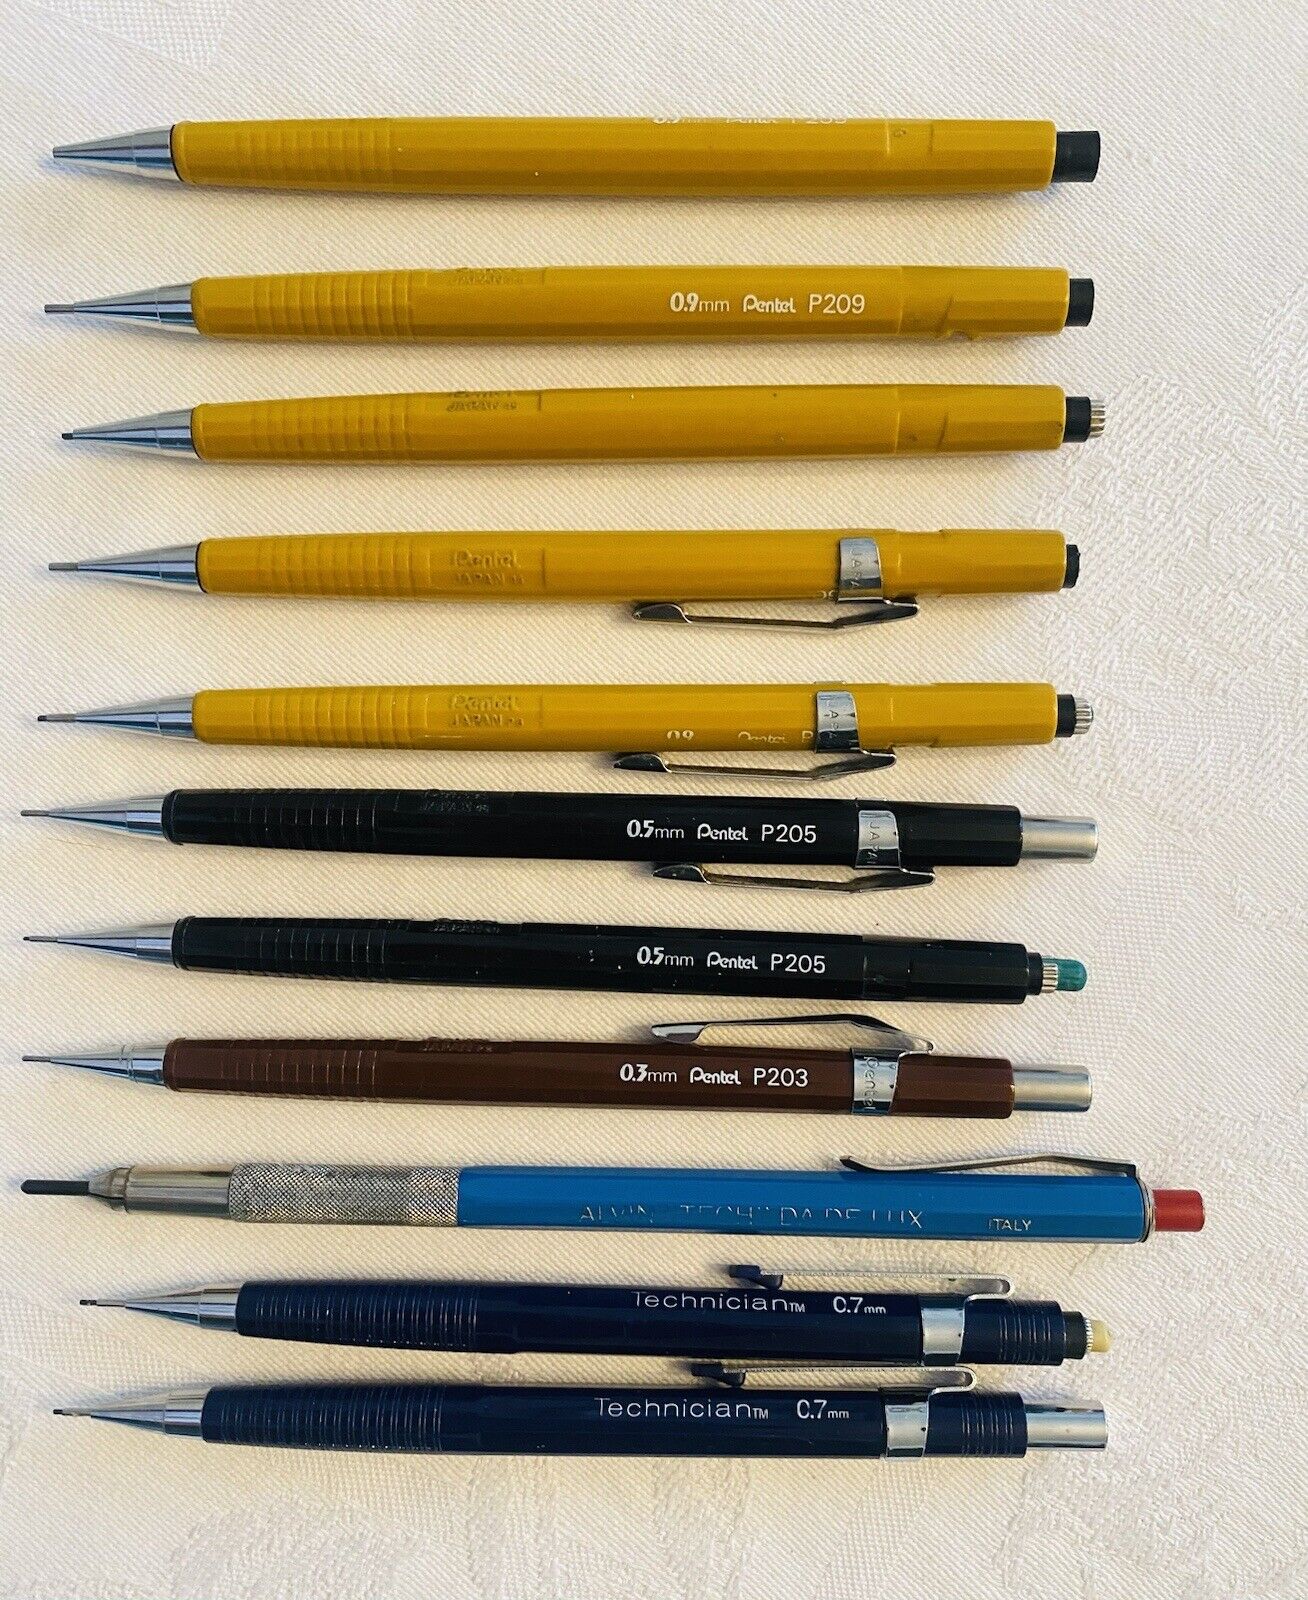 Vintage Drawing Drafting Mechanical Pencils Mixed Pentel P203 205 209 Lot Of 11